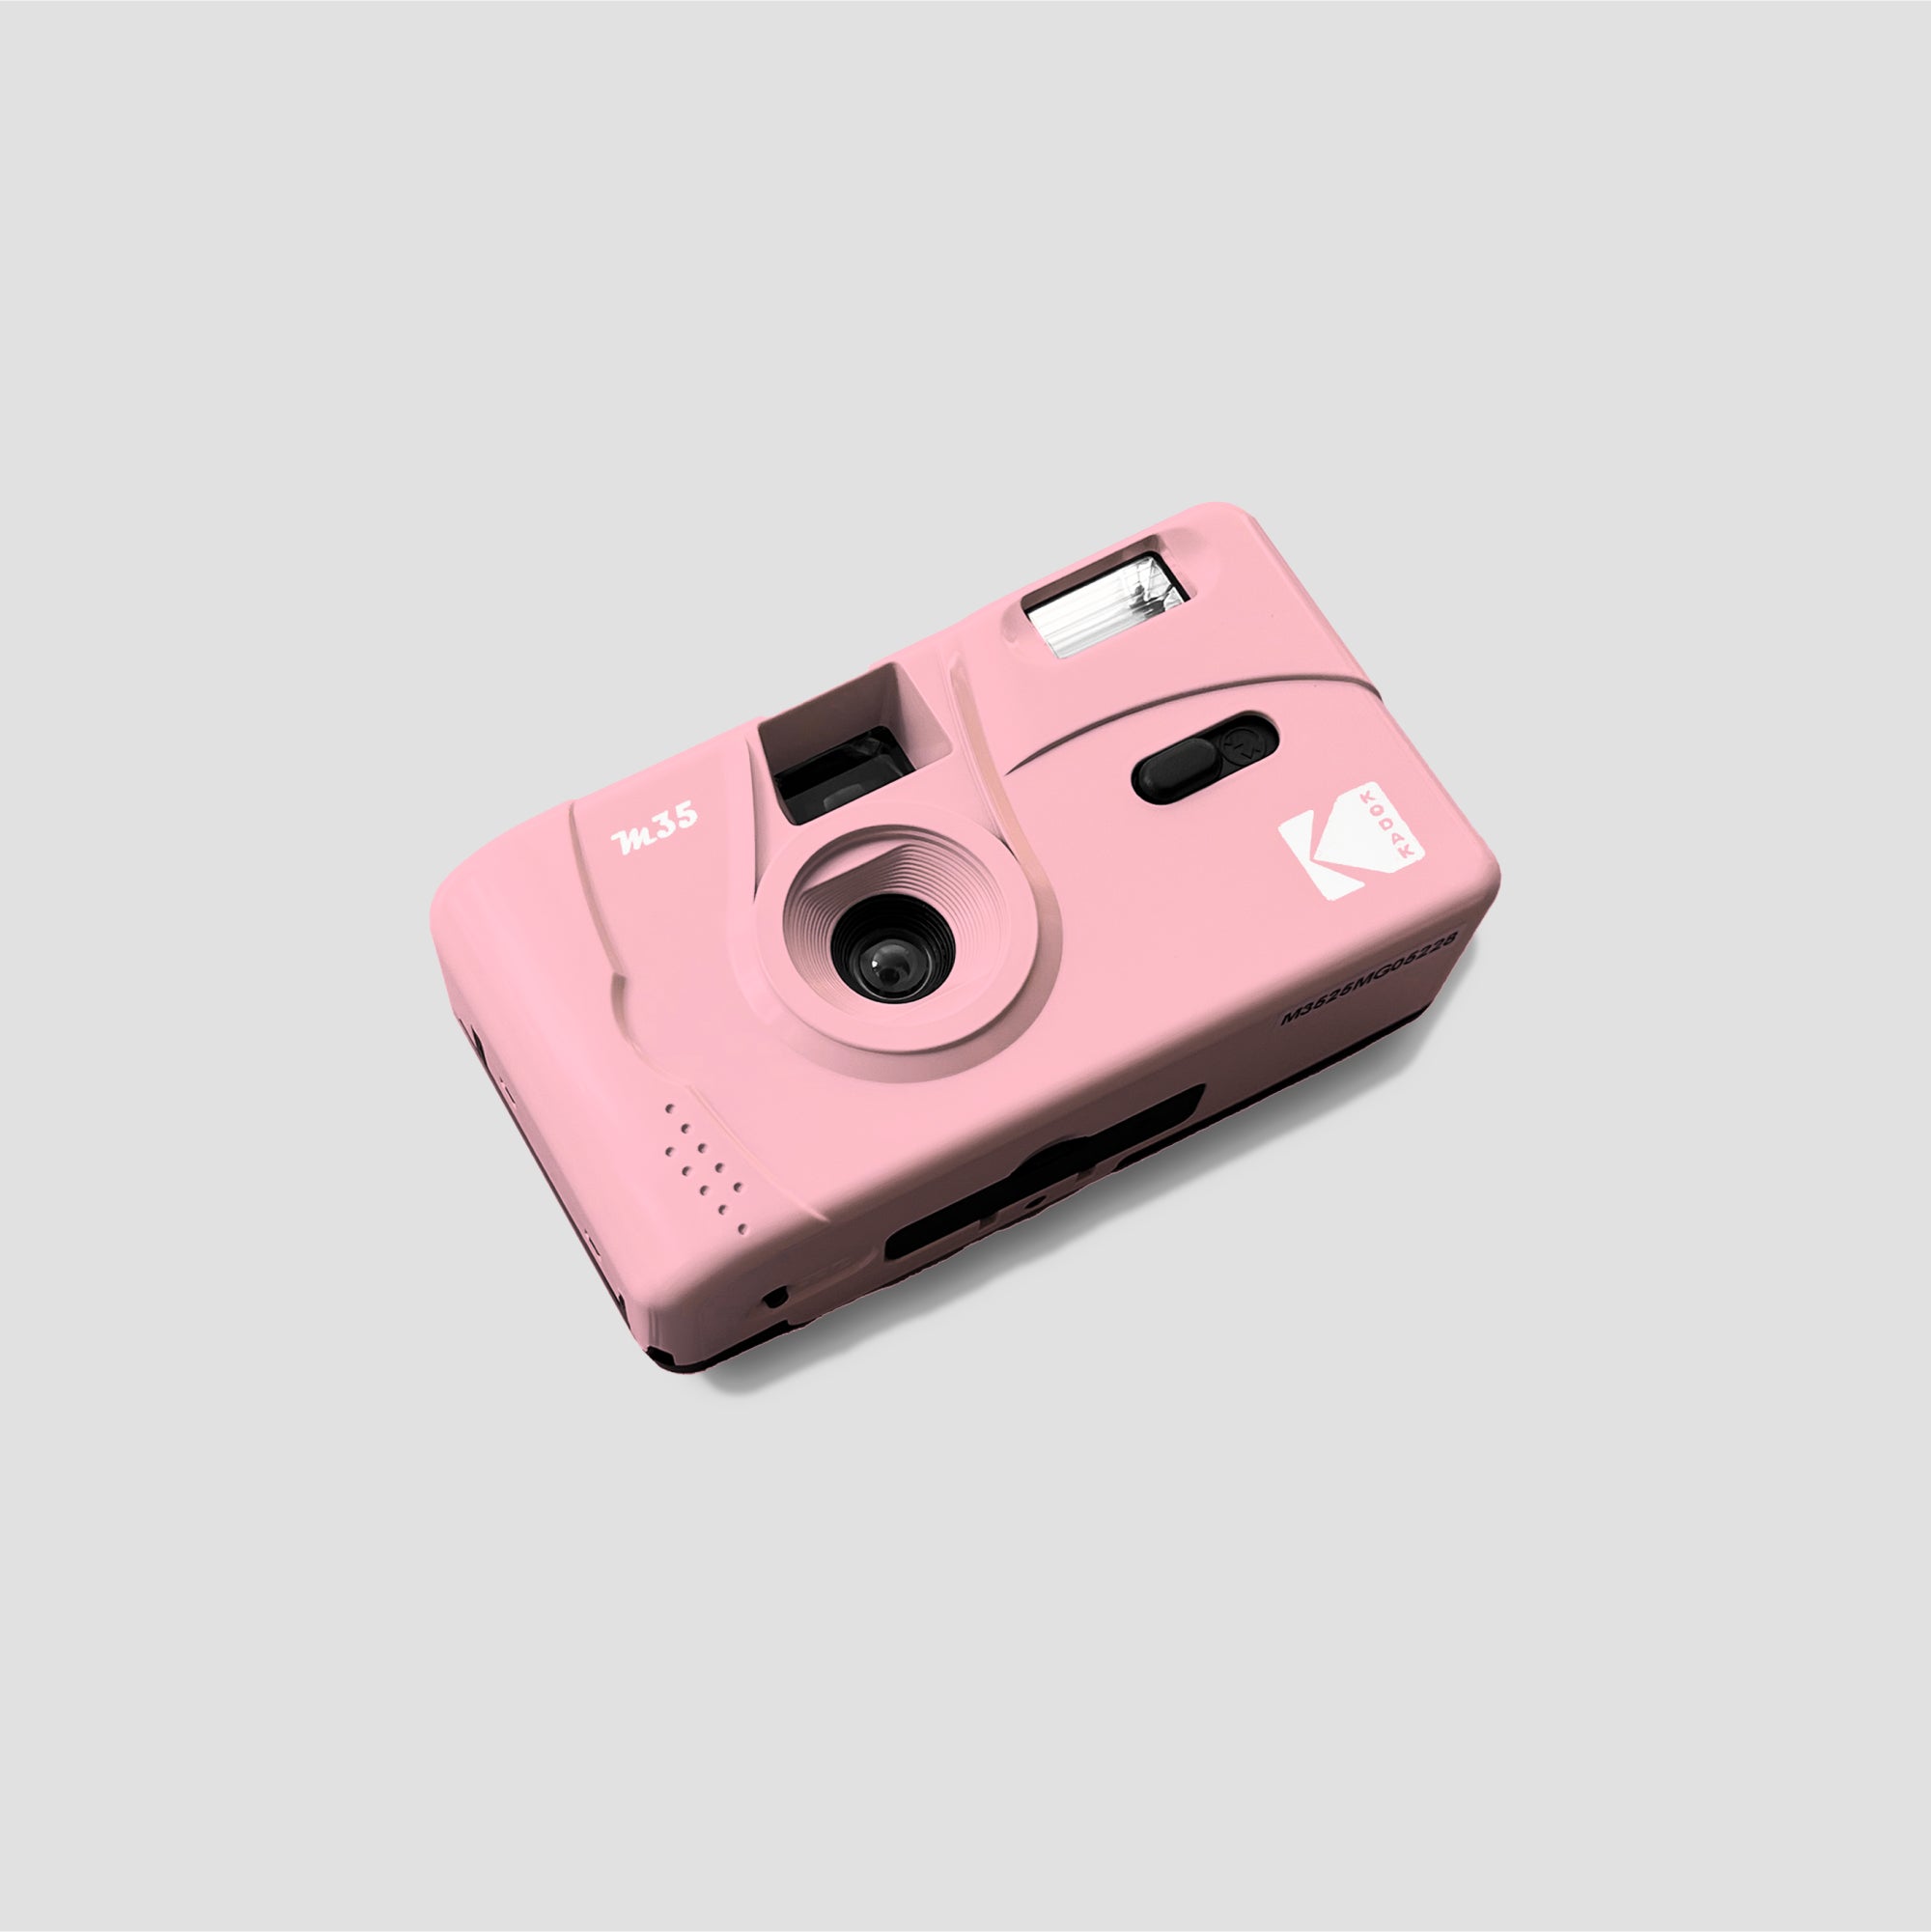 Kodak M35 Startkit Pink 